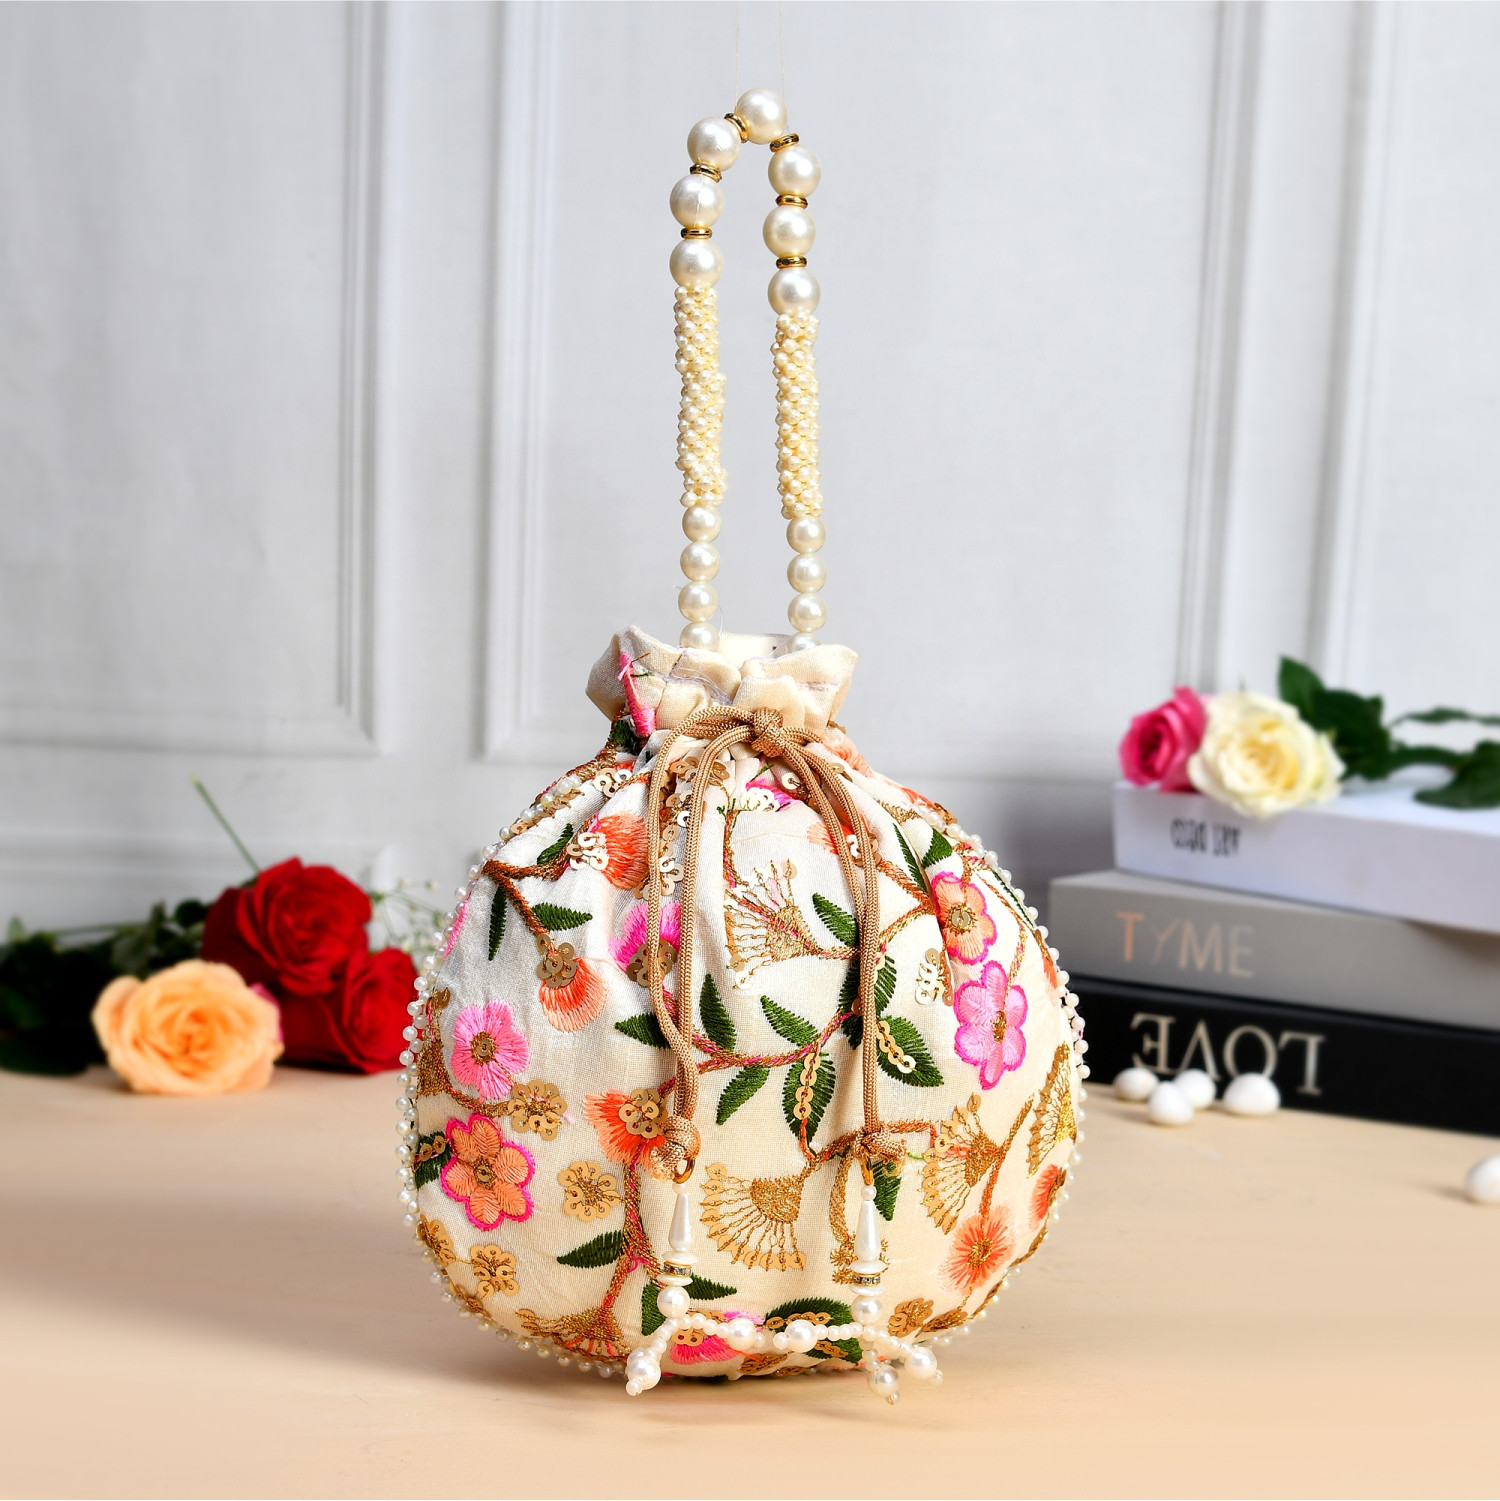 Kuber Industries Potli | Silk Wedding Potli | Christmas Gift Potli | Baby Shower Potli | Traditional Shagun Potli | Drawstring with Beads Handle Potli | New Flower Embroidery Potli | Pack of 2 | Multi